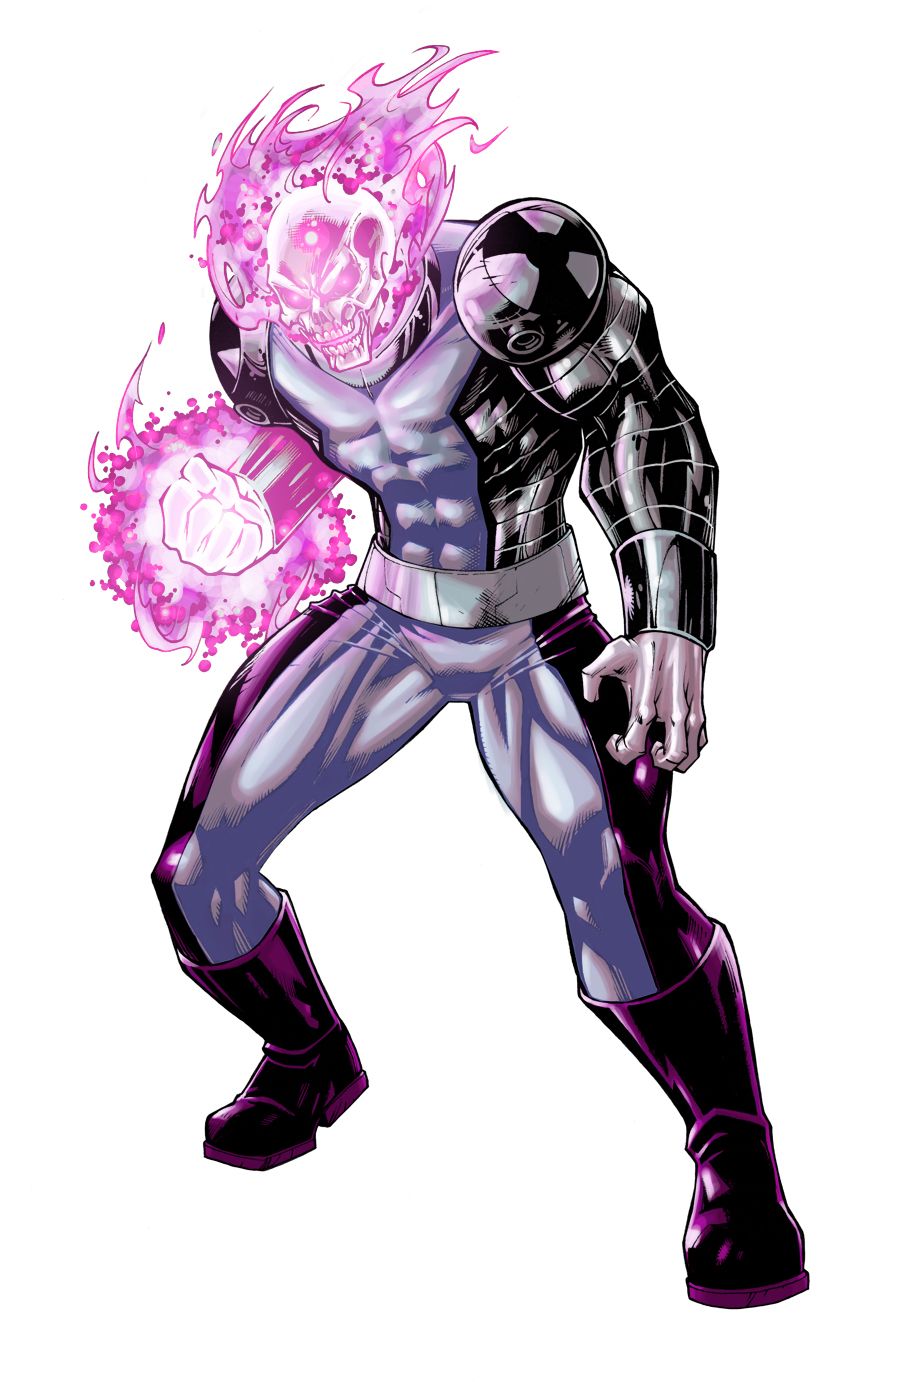 Atomic Skull. Dc comics characters, Superhero art, Villain character